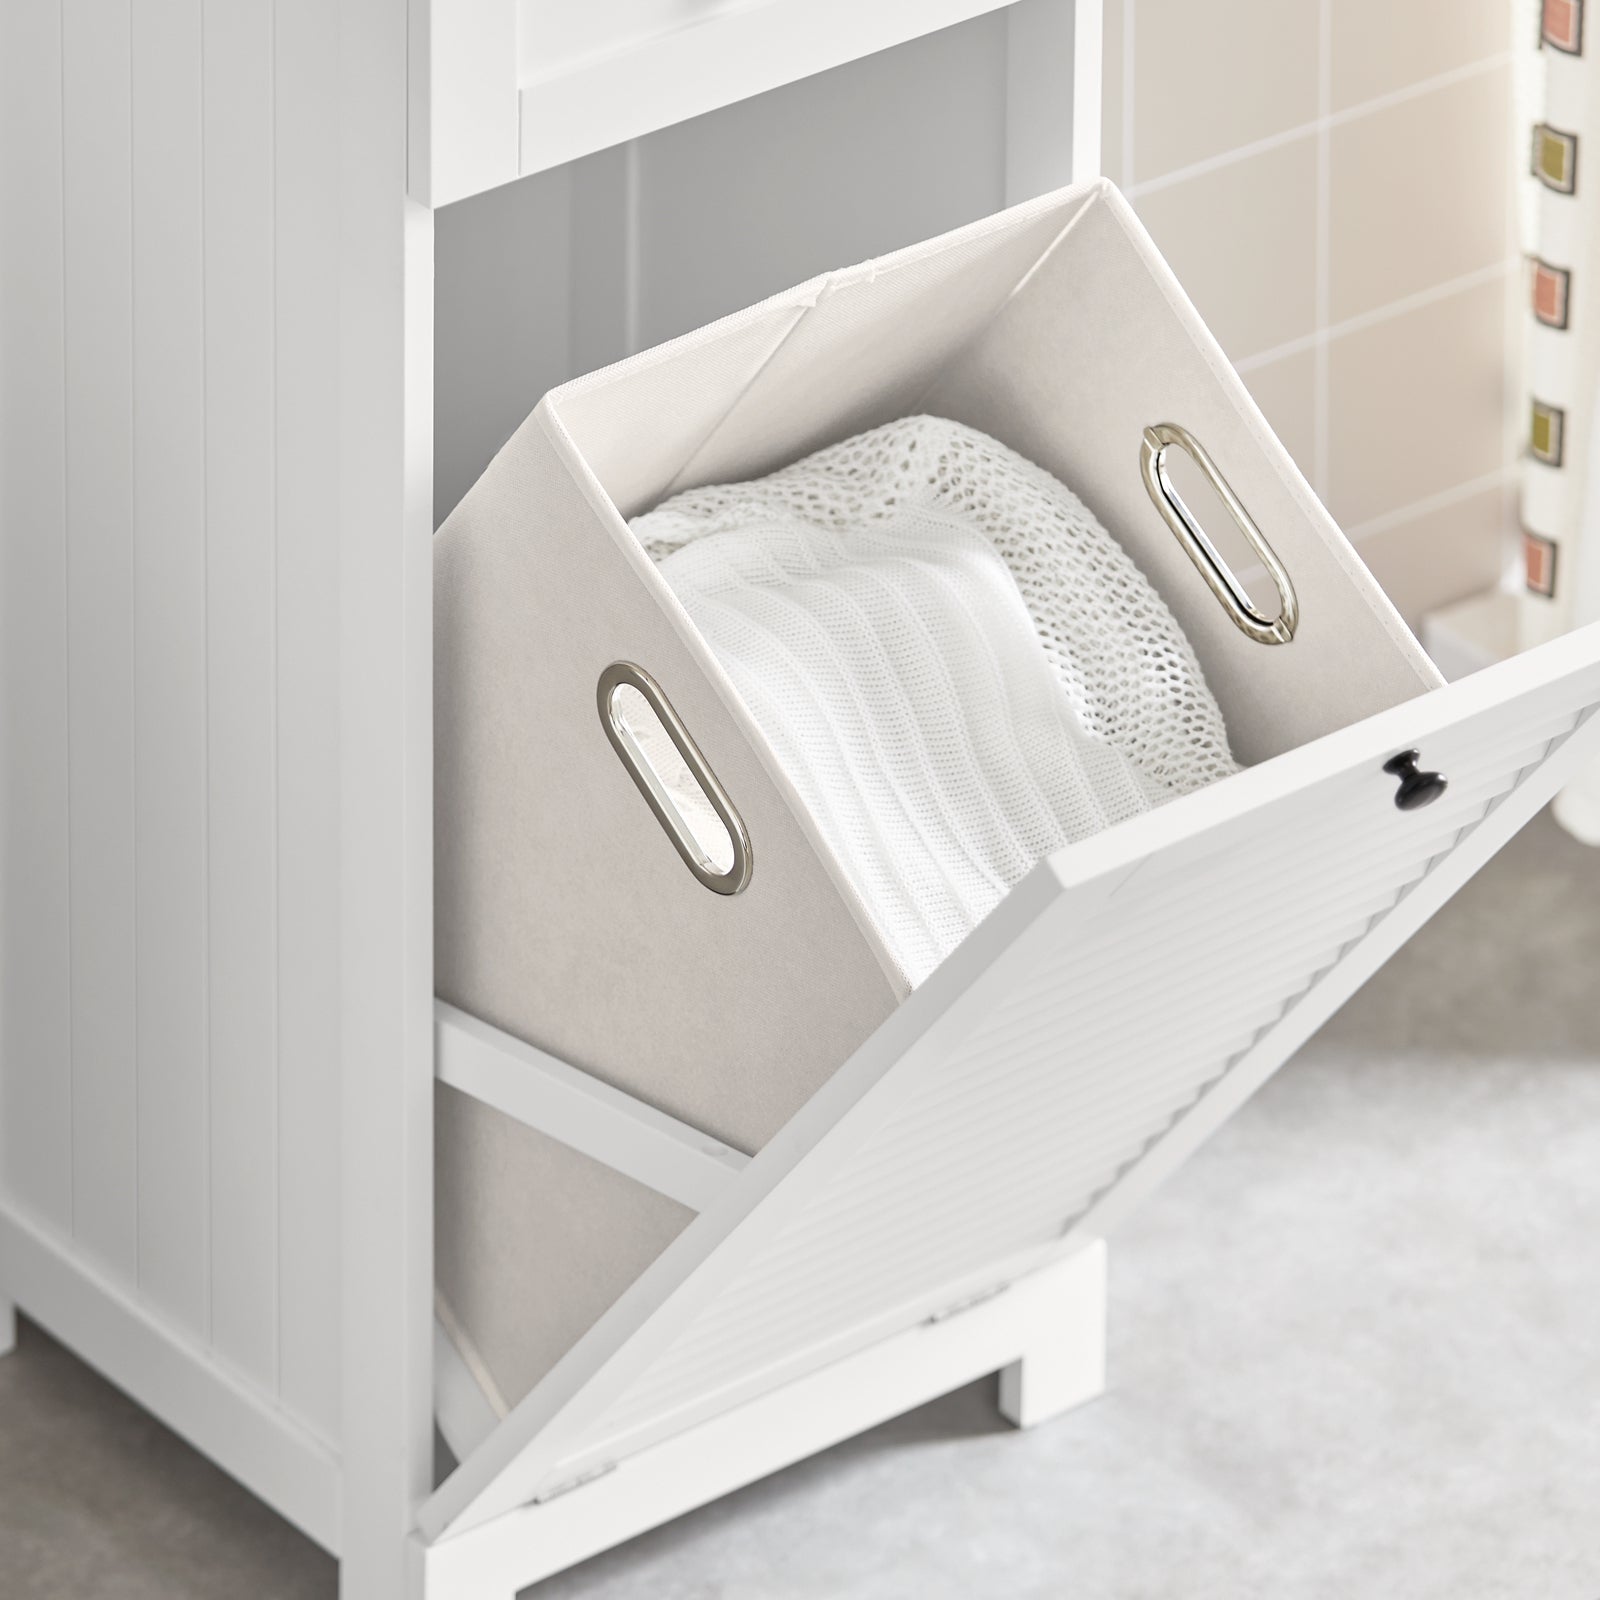 SoBuy BZR73-W,Bathroom Storage Cabinet Unit with Drawer&Laundry Basket,Laundry Cabinet White